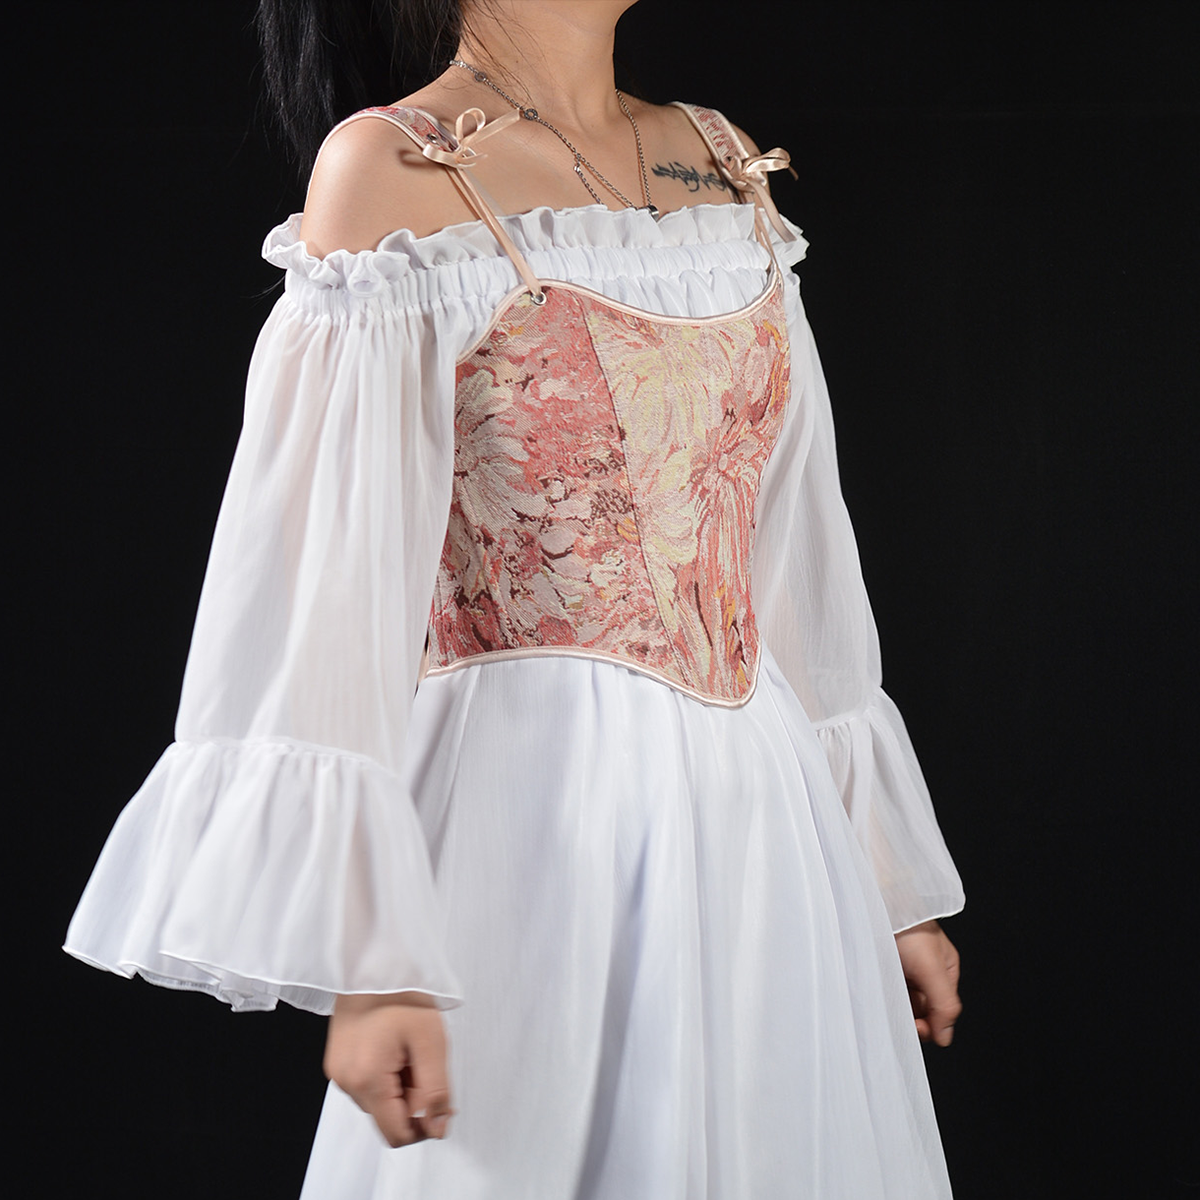 Renaissance bustier corset vu de profil